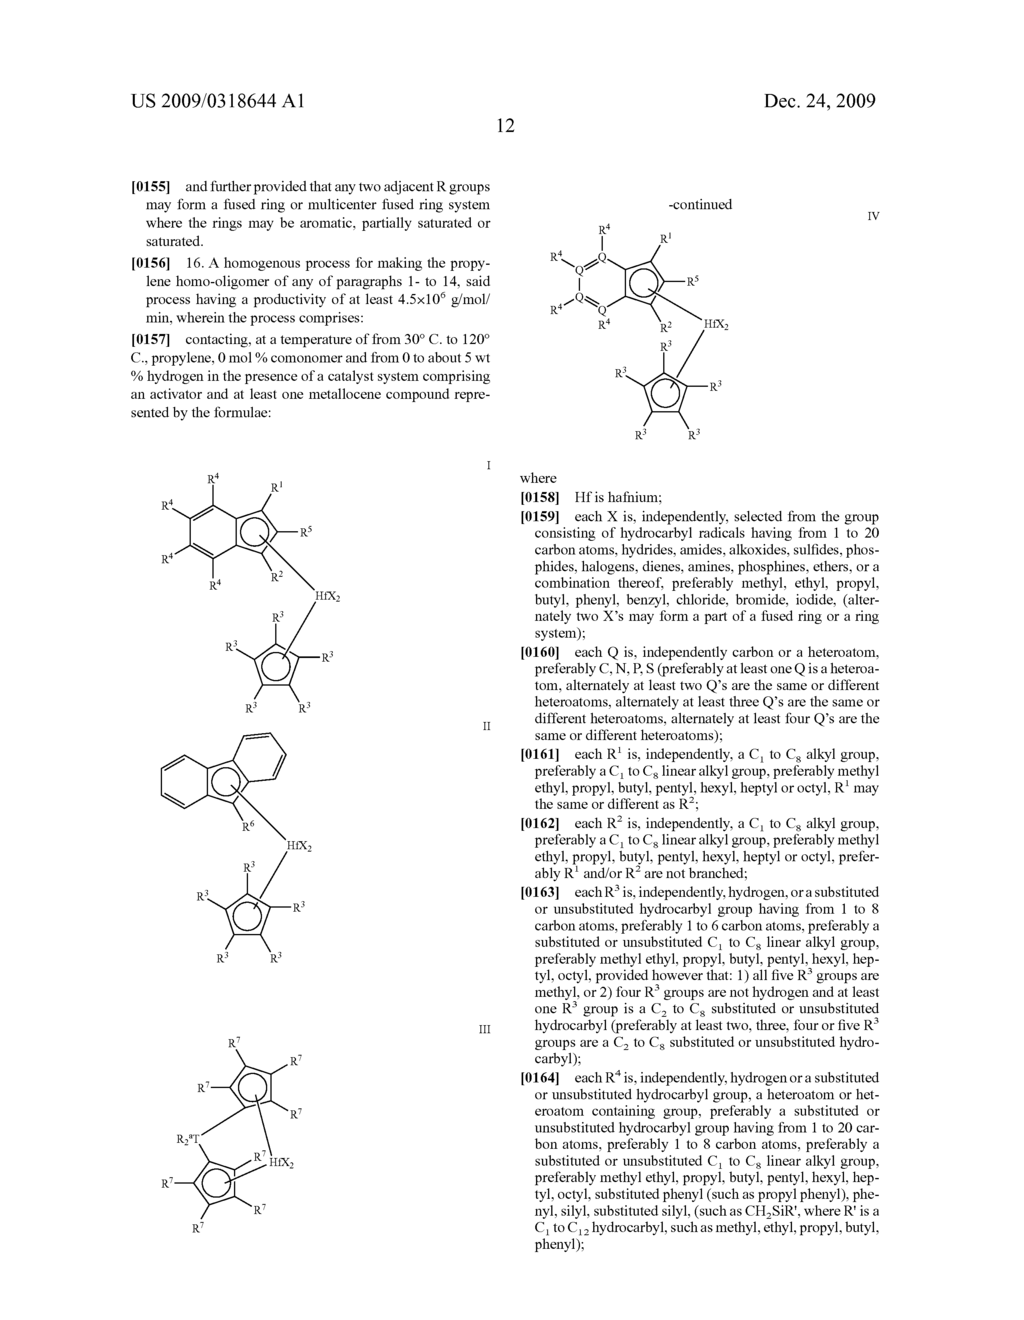 High Vinyl Terminated Propylene Based Oligomers - diagram, schematic, and image 15